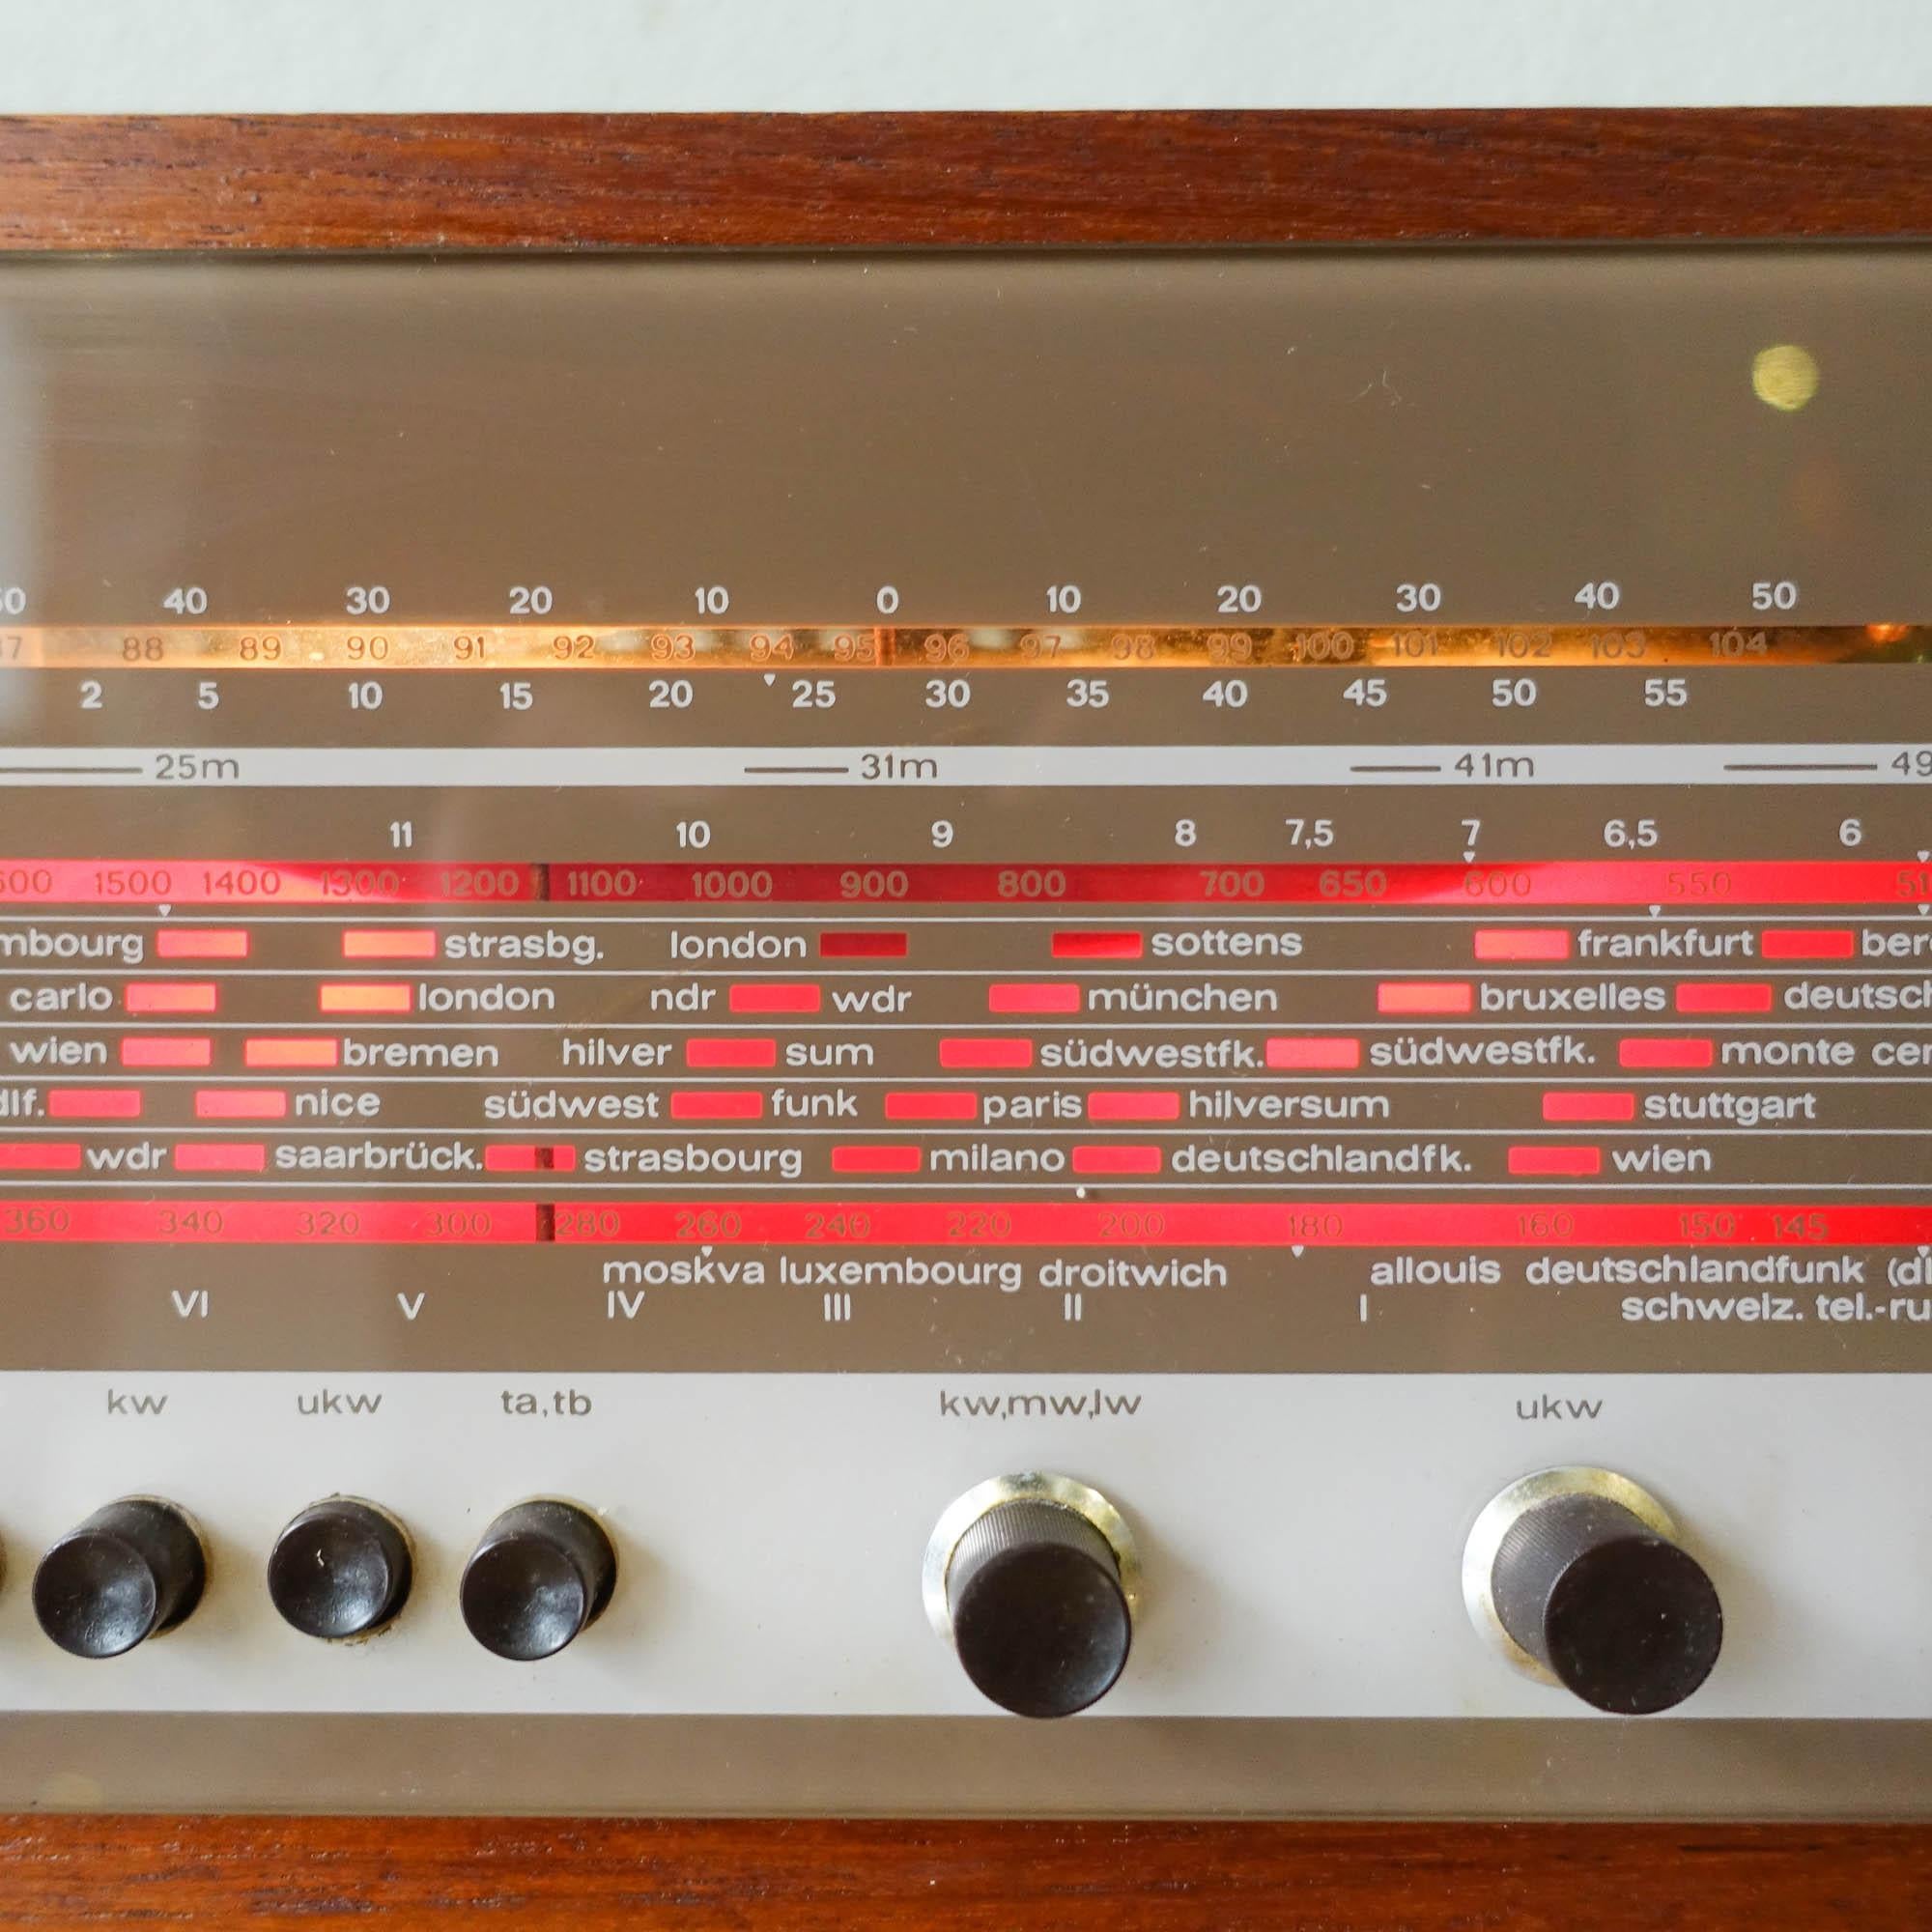 Teak Type 135 Radio from Wega, 1960s For Sale 1